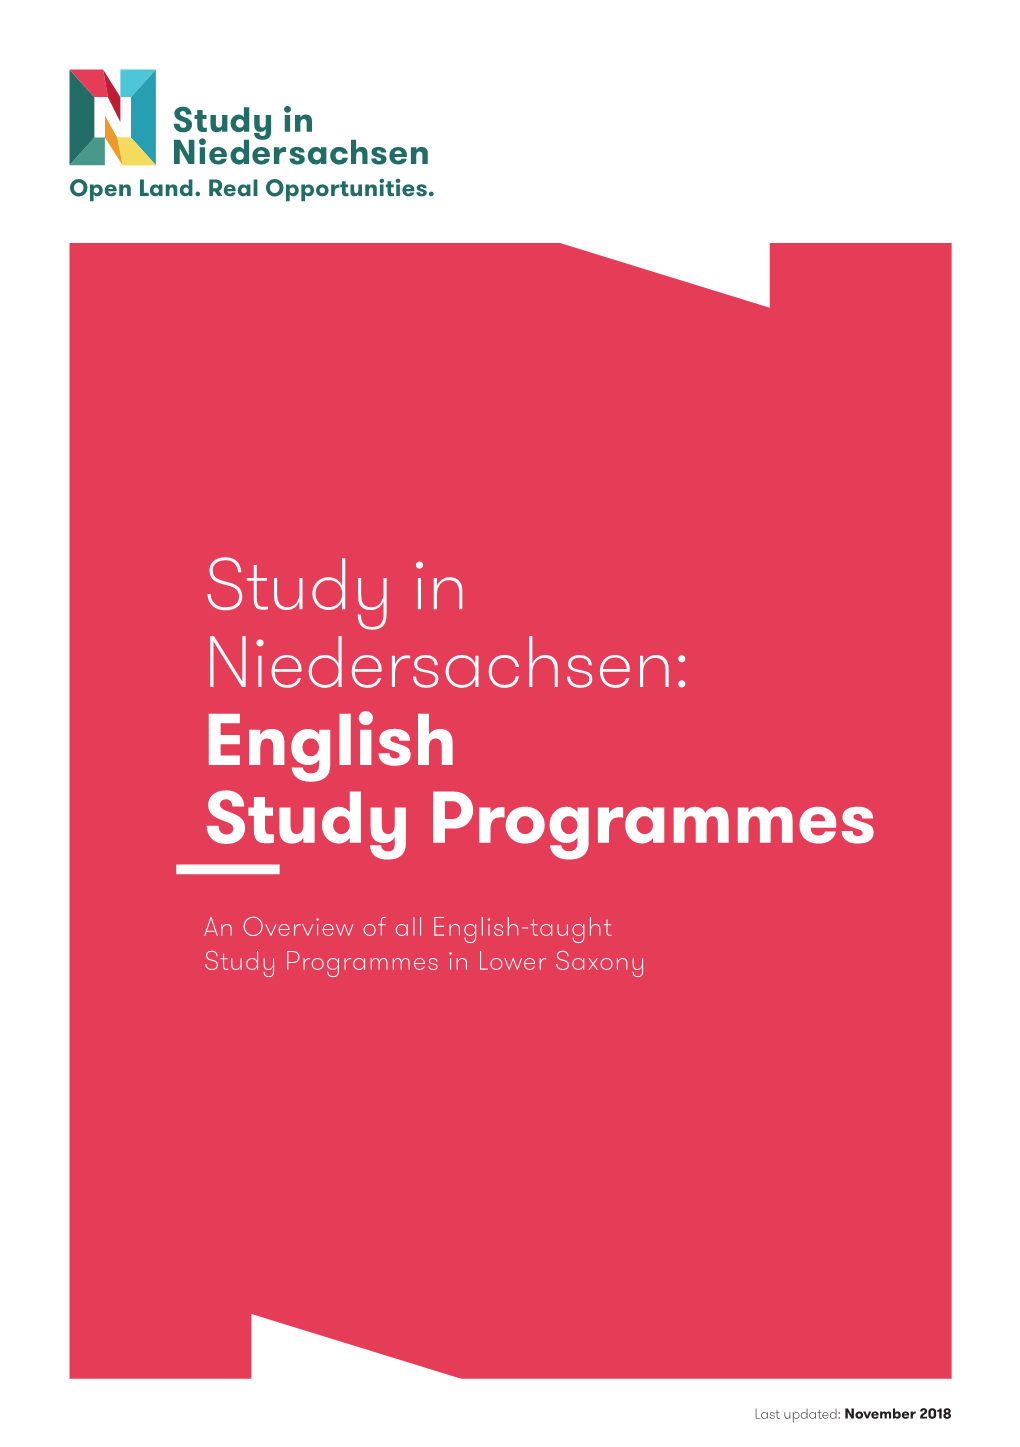 English Study Programmes